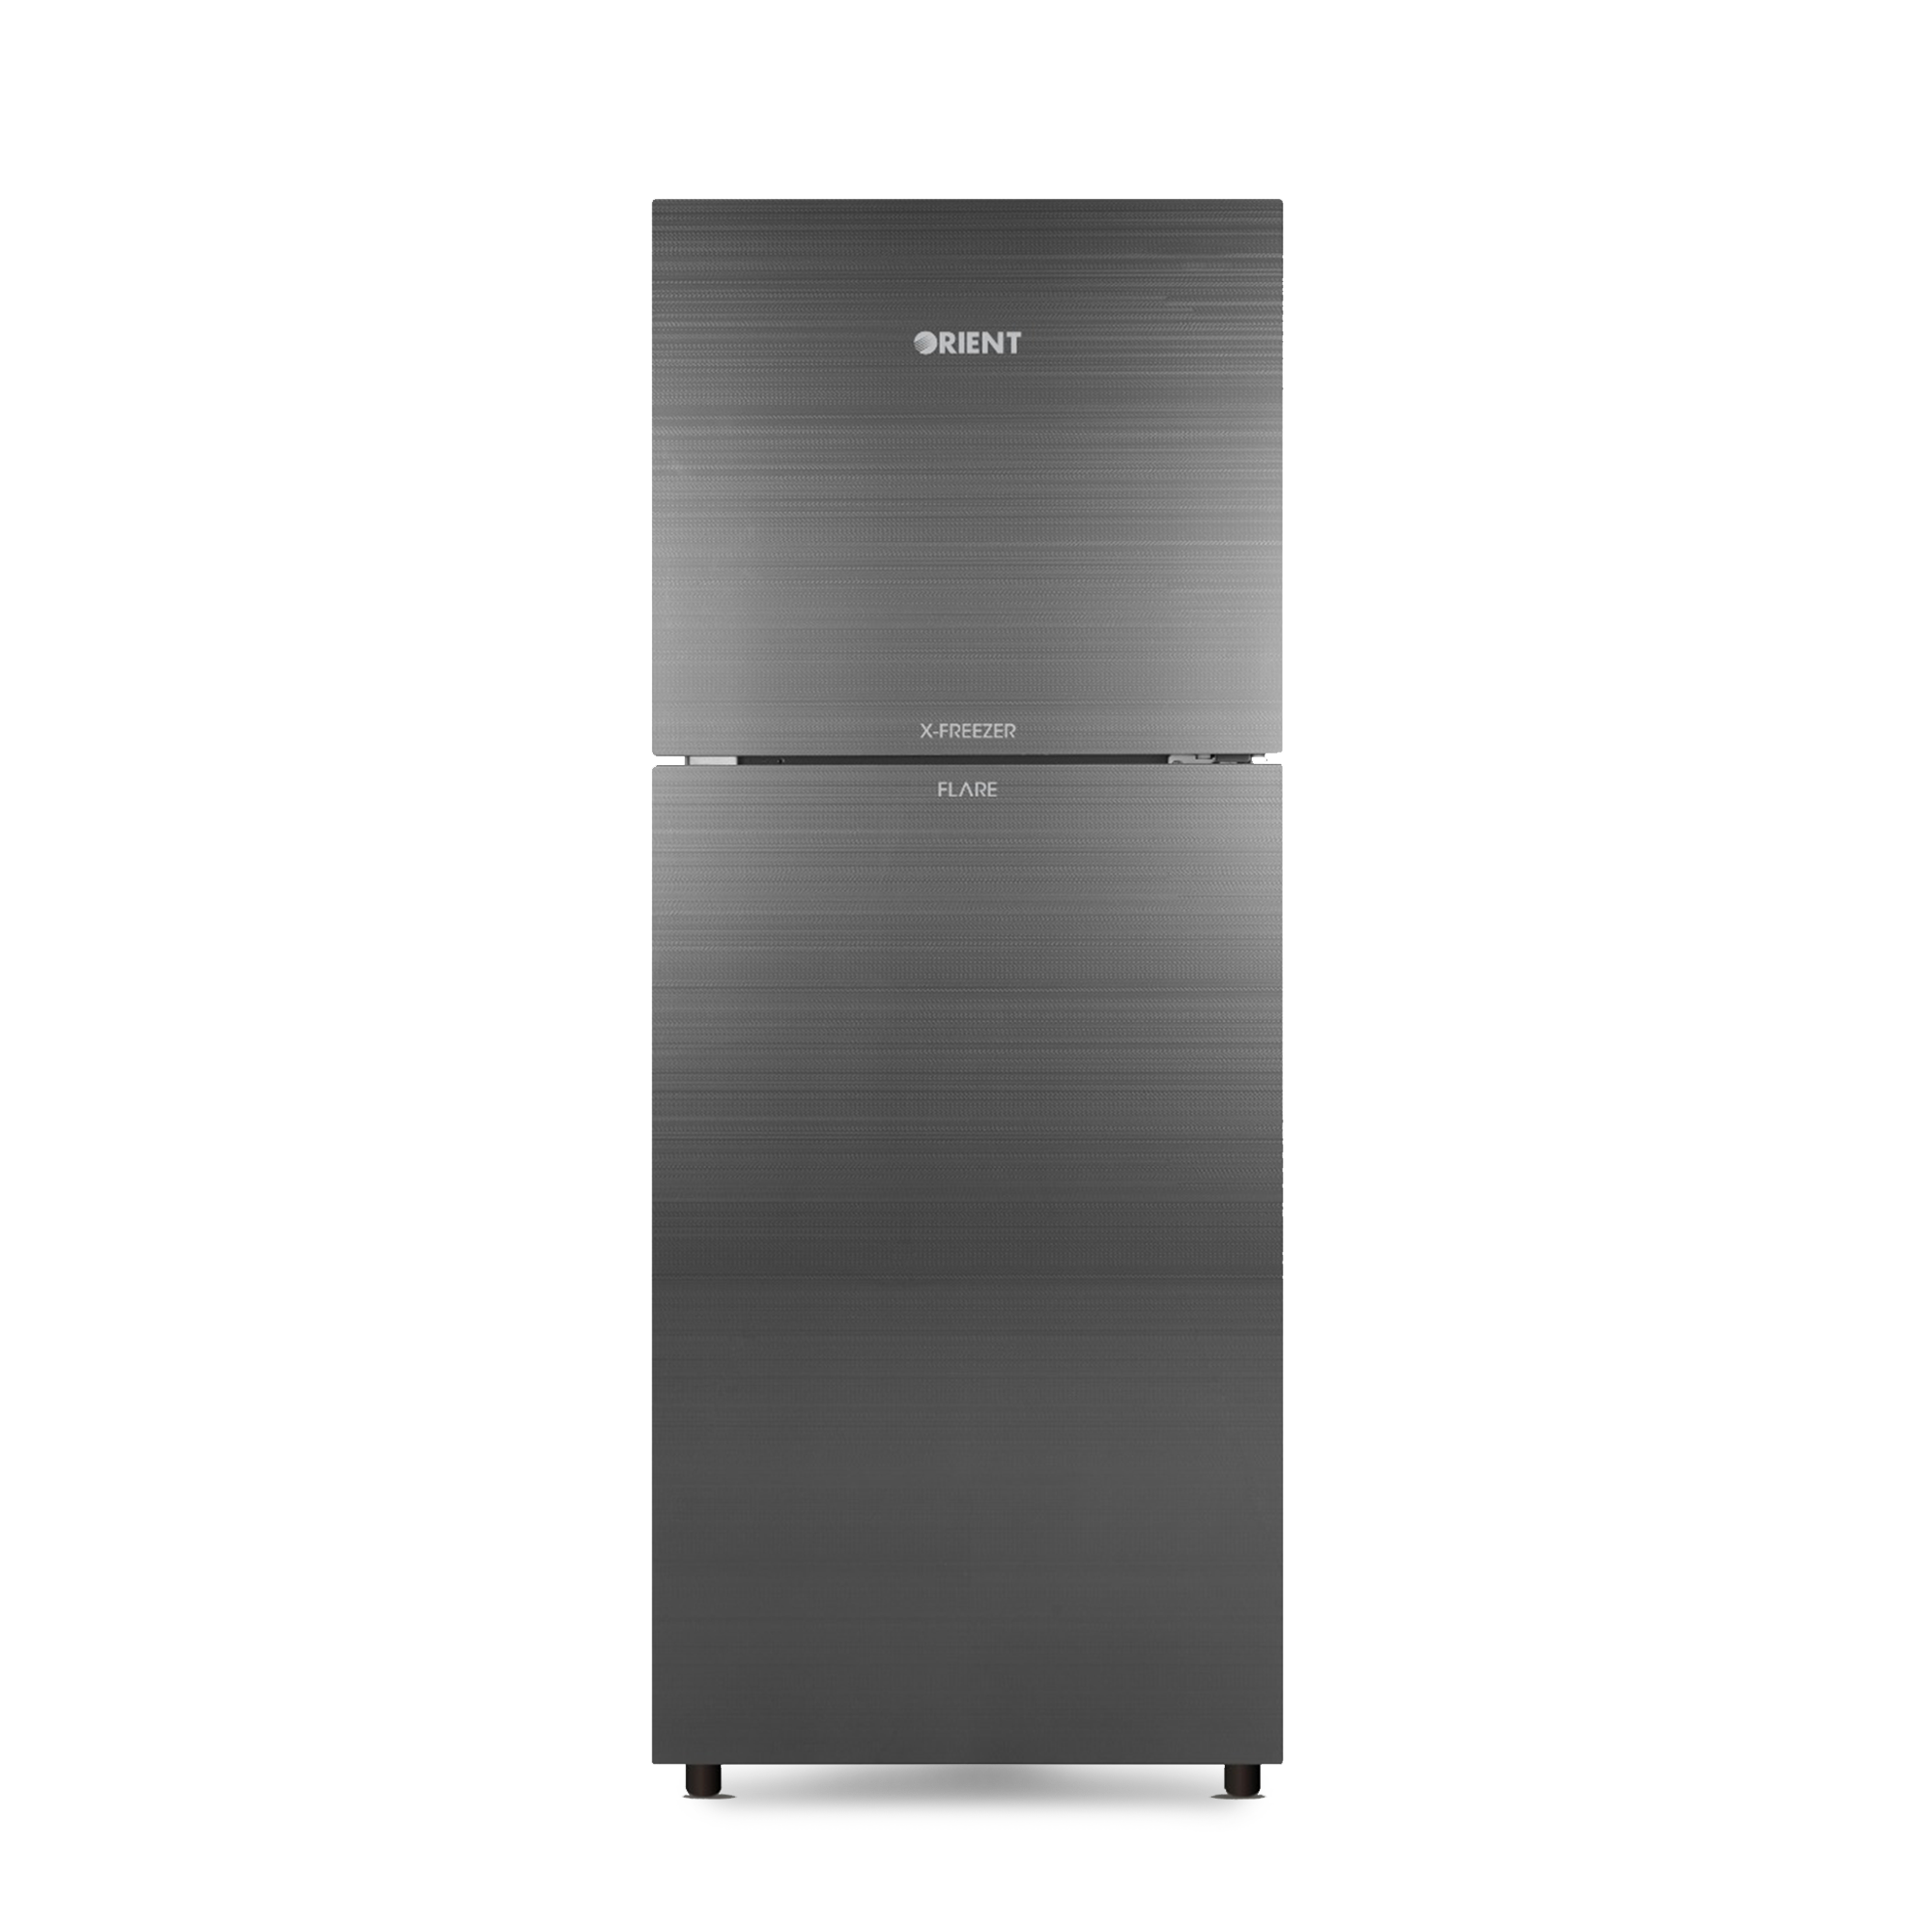 Flare 470 Liters Refrigerator